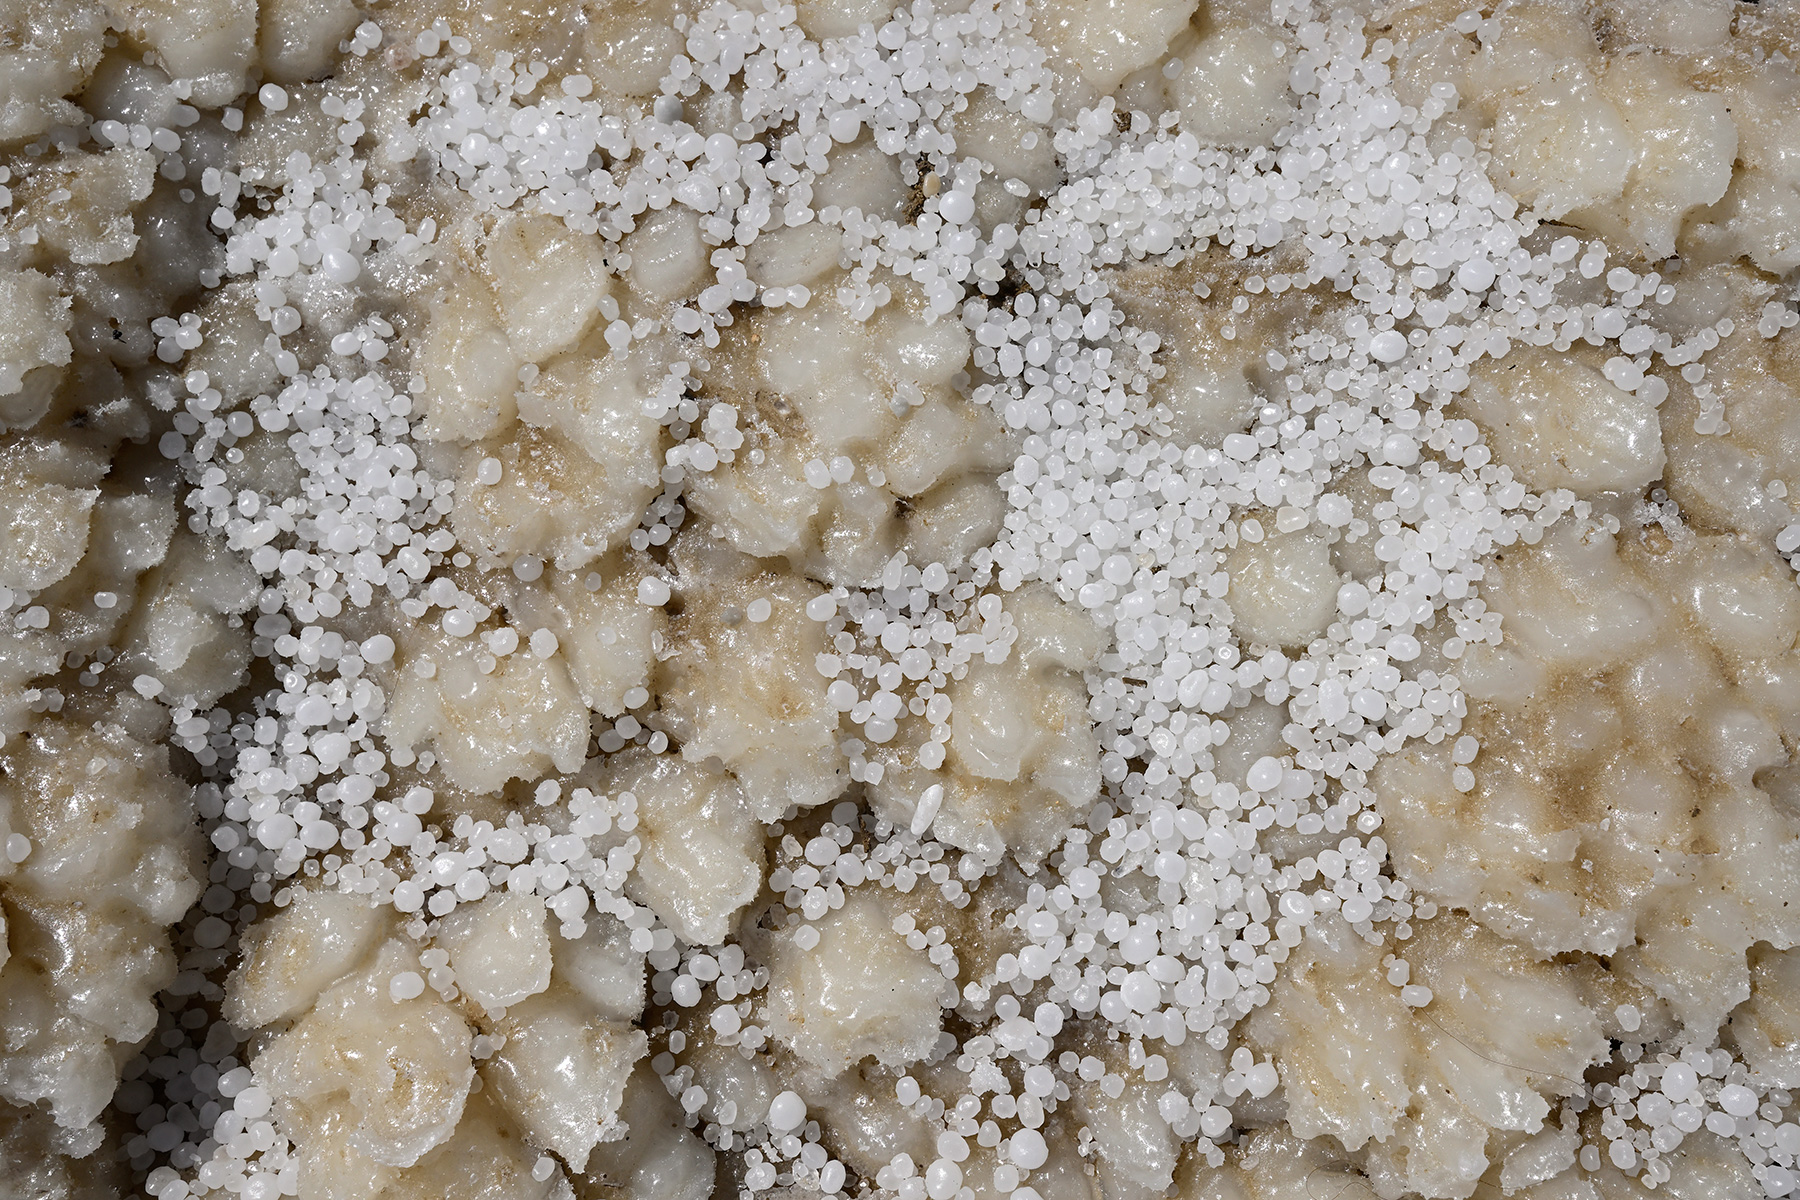 Mer Morte (Israël) - Petites perles de sel sur le rivage de la Mer Morte 